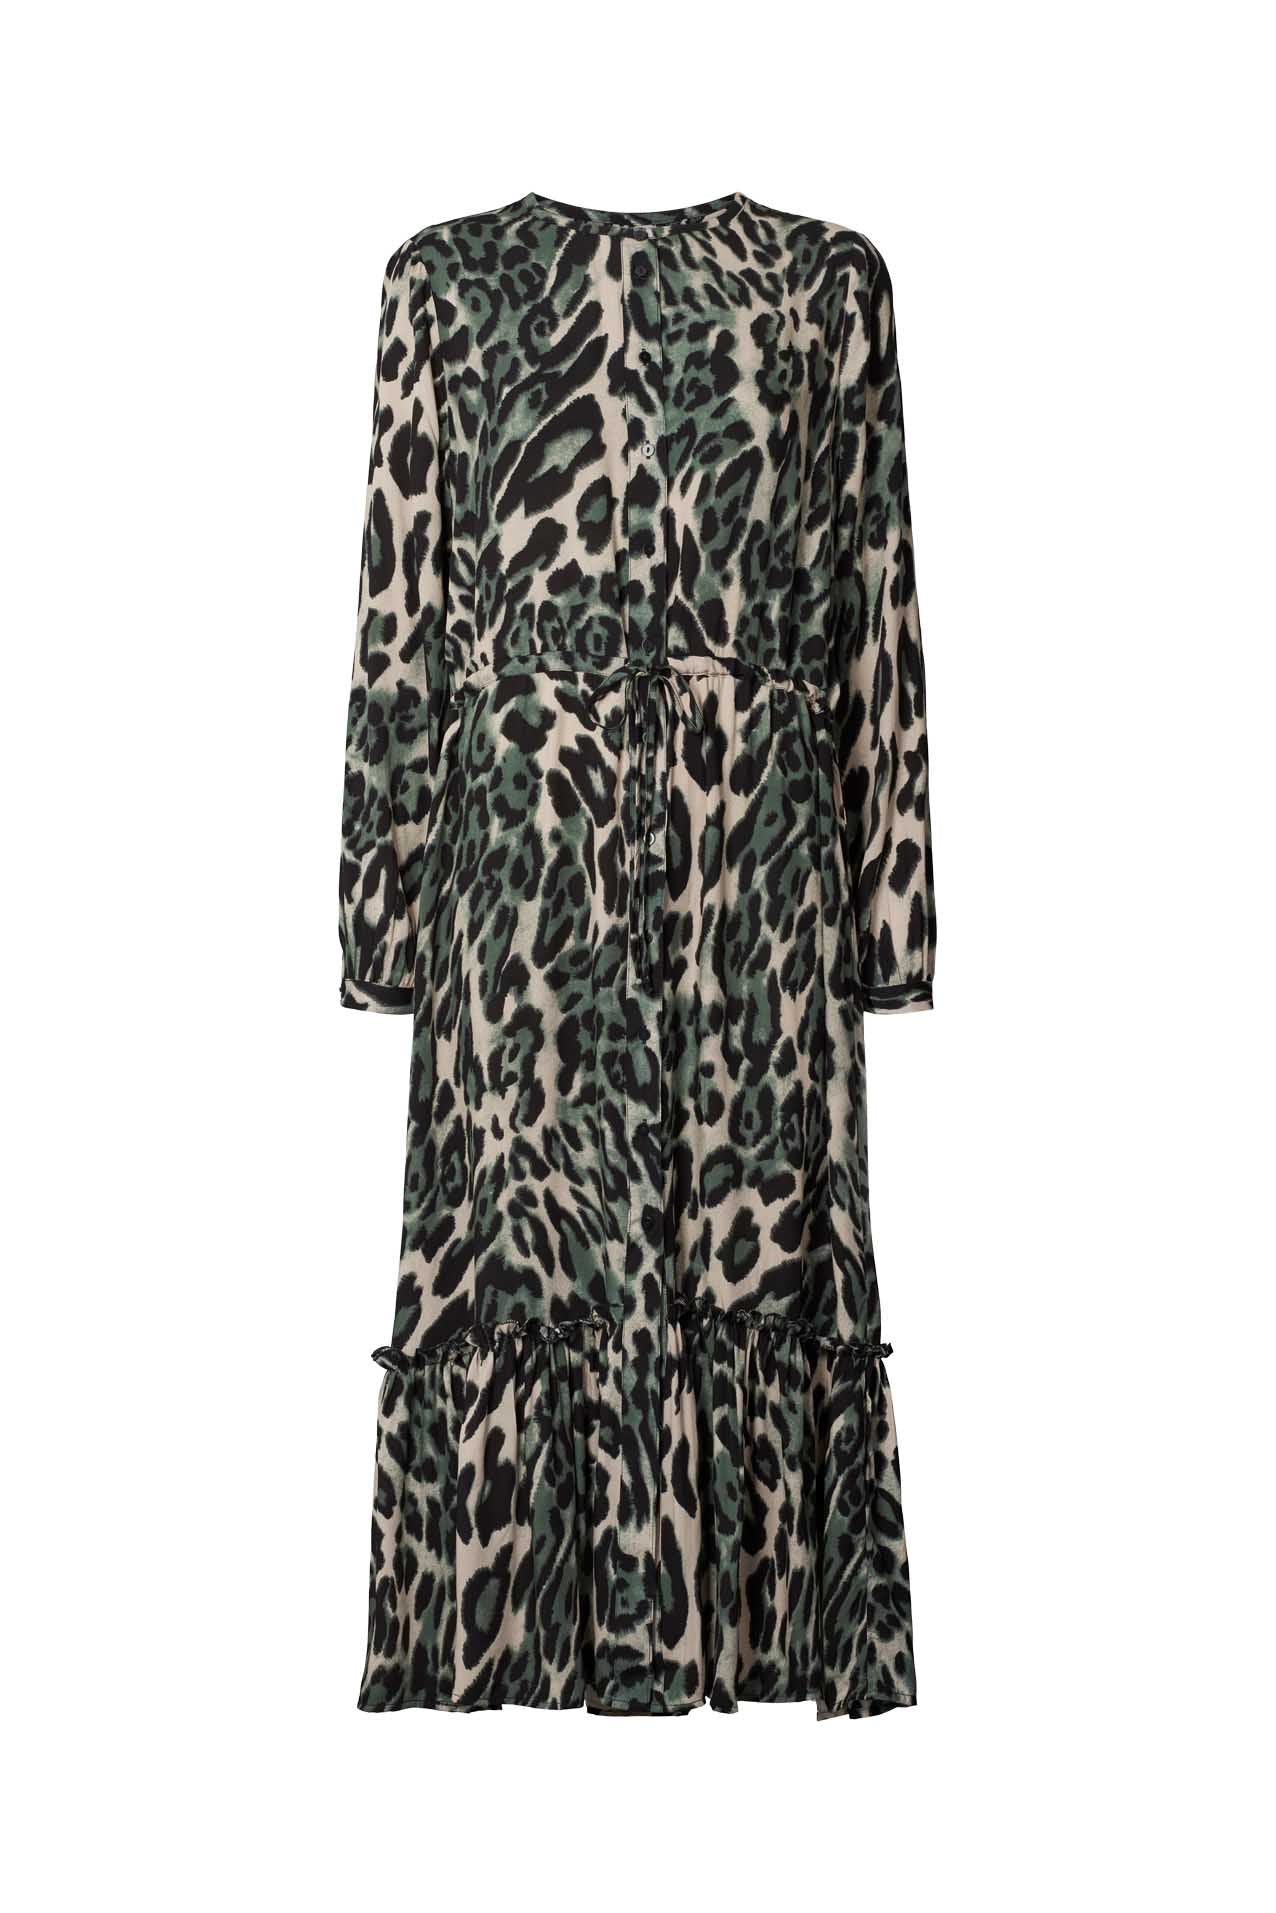 Lollys Laundry Anastacia Dress - 72 Leopard Print Dark